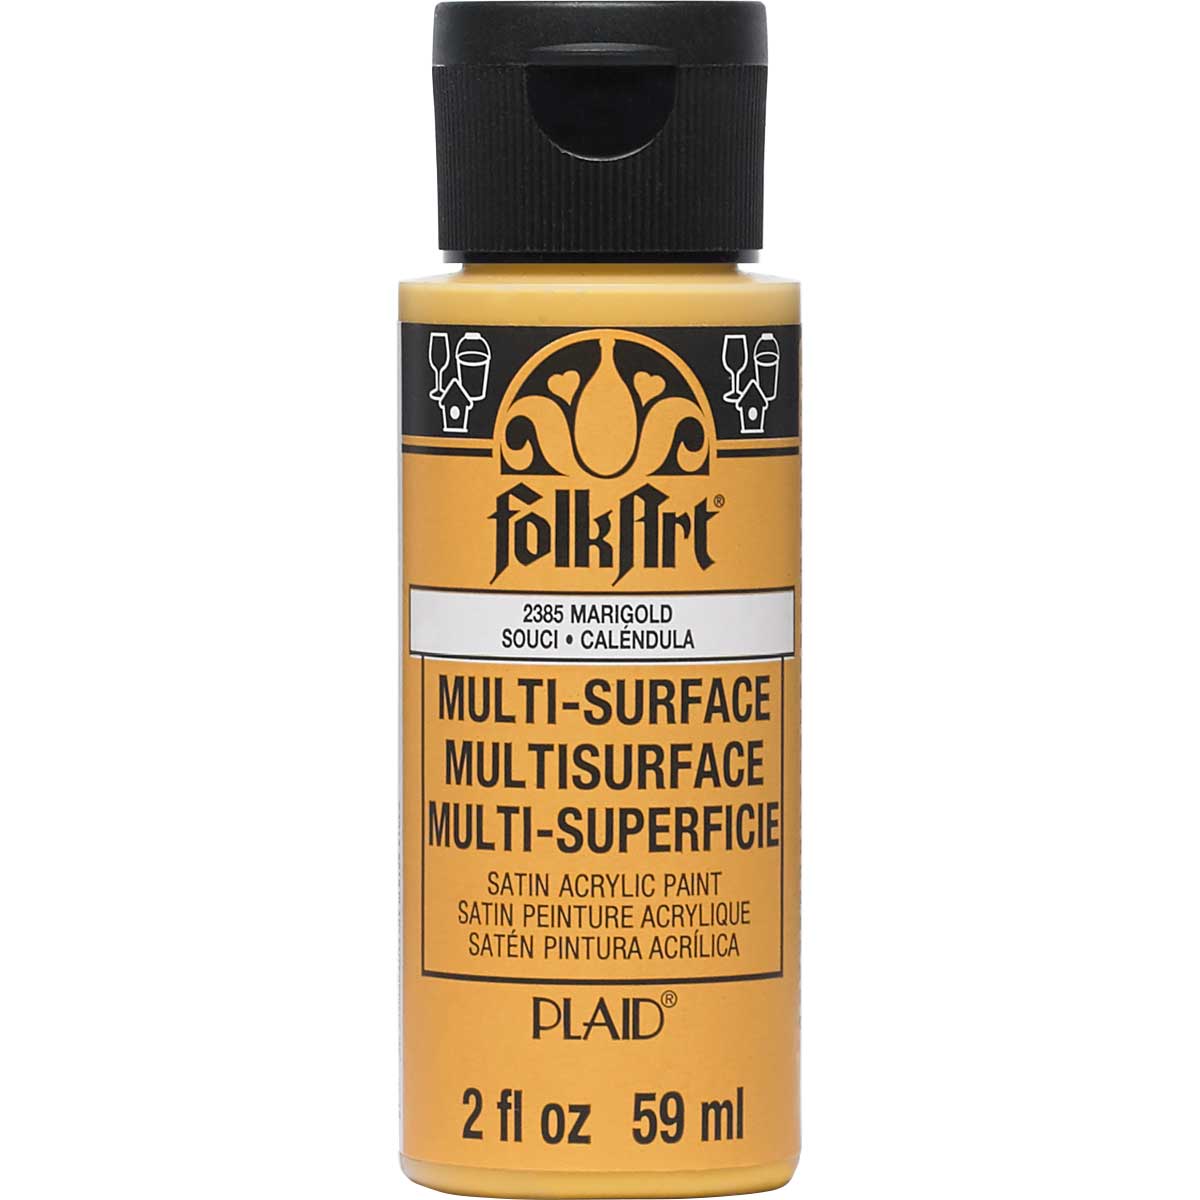 FolkArt ® Multi-Surface Satin Acrylic Paints - Marigold, 2 oz. - 2385